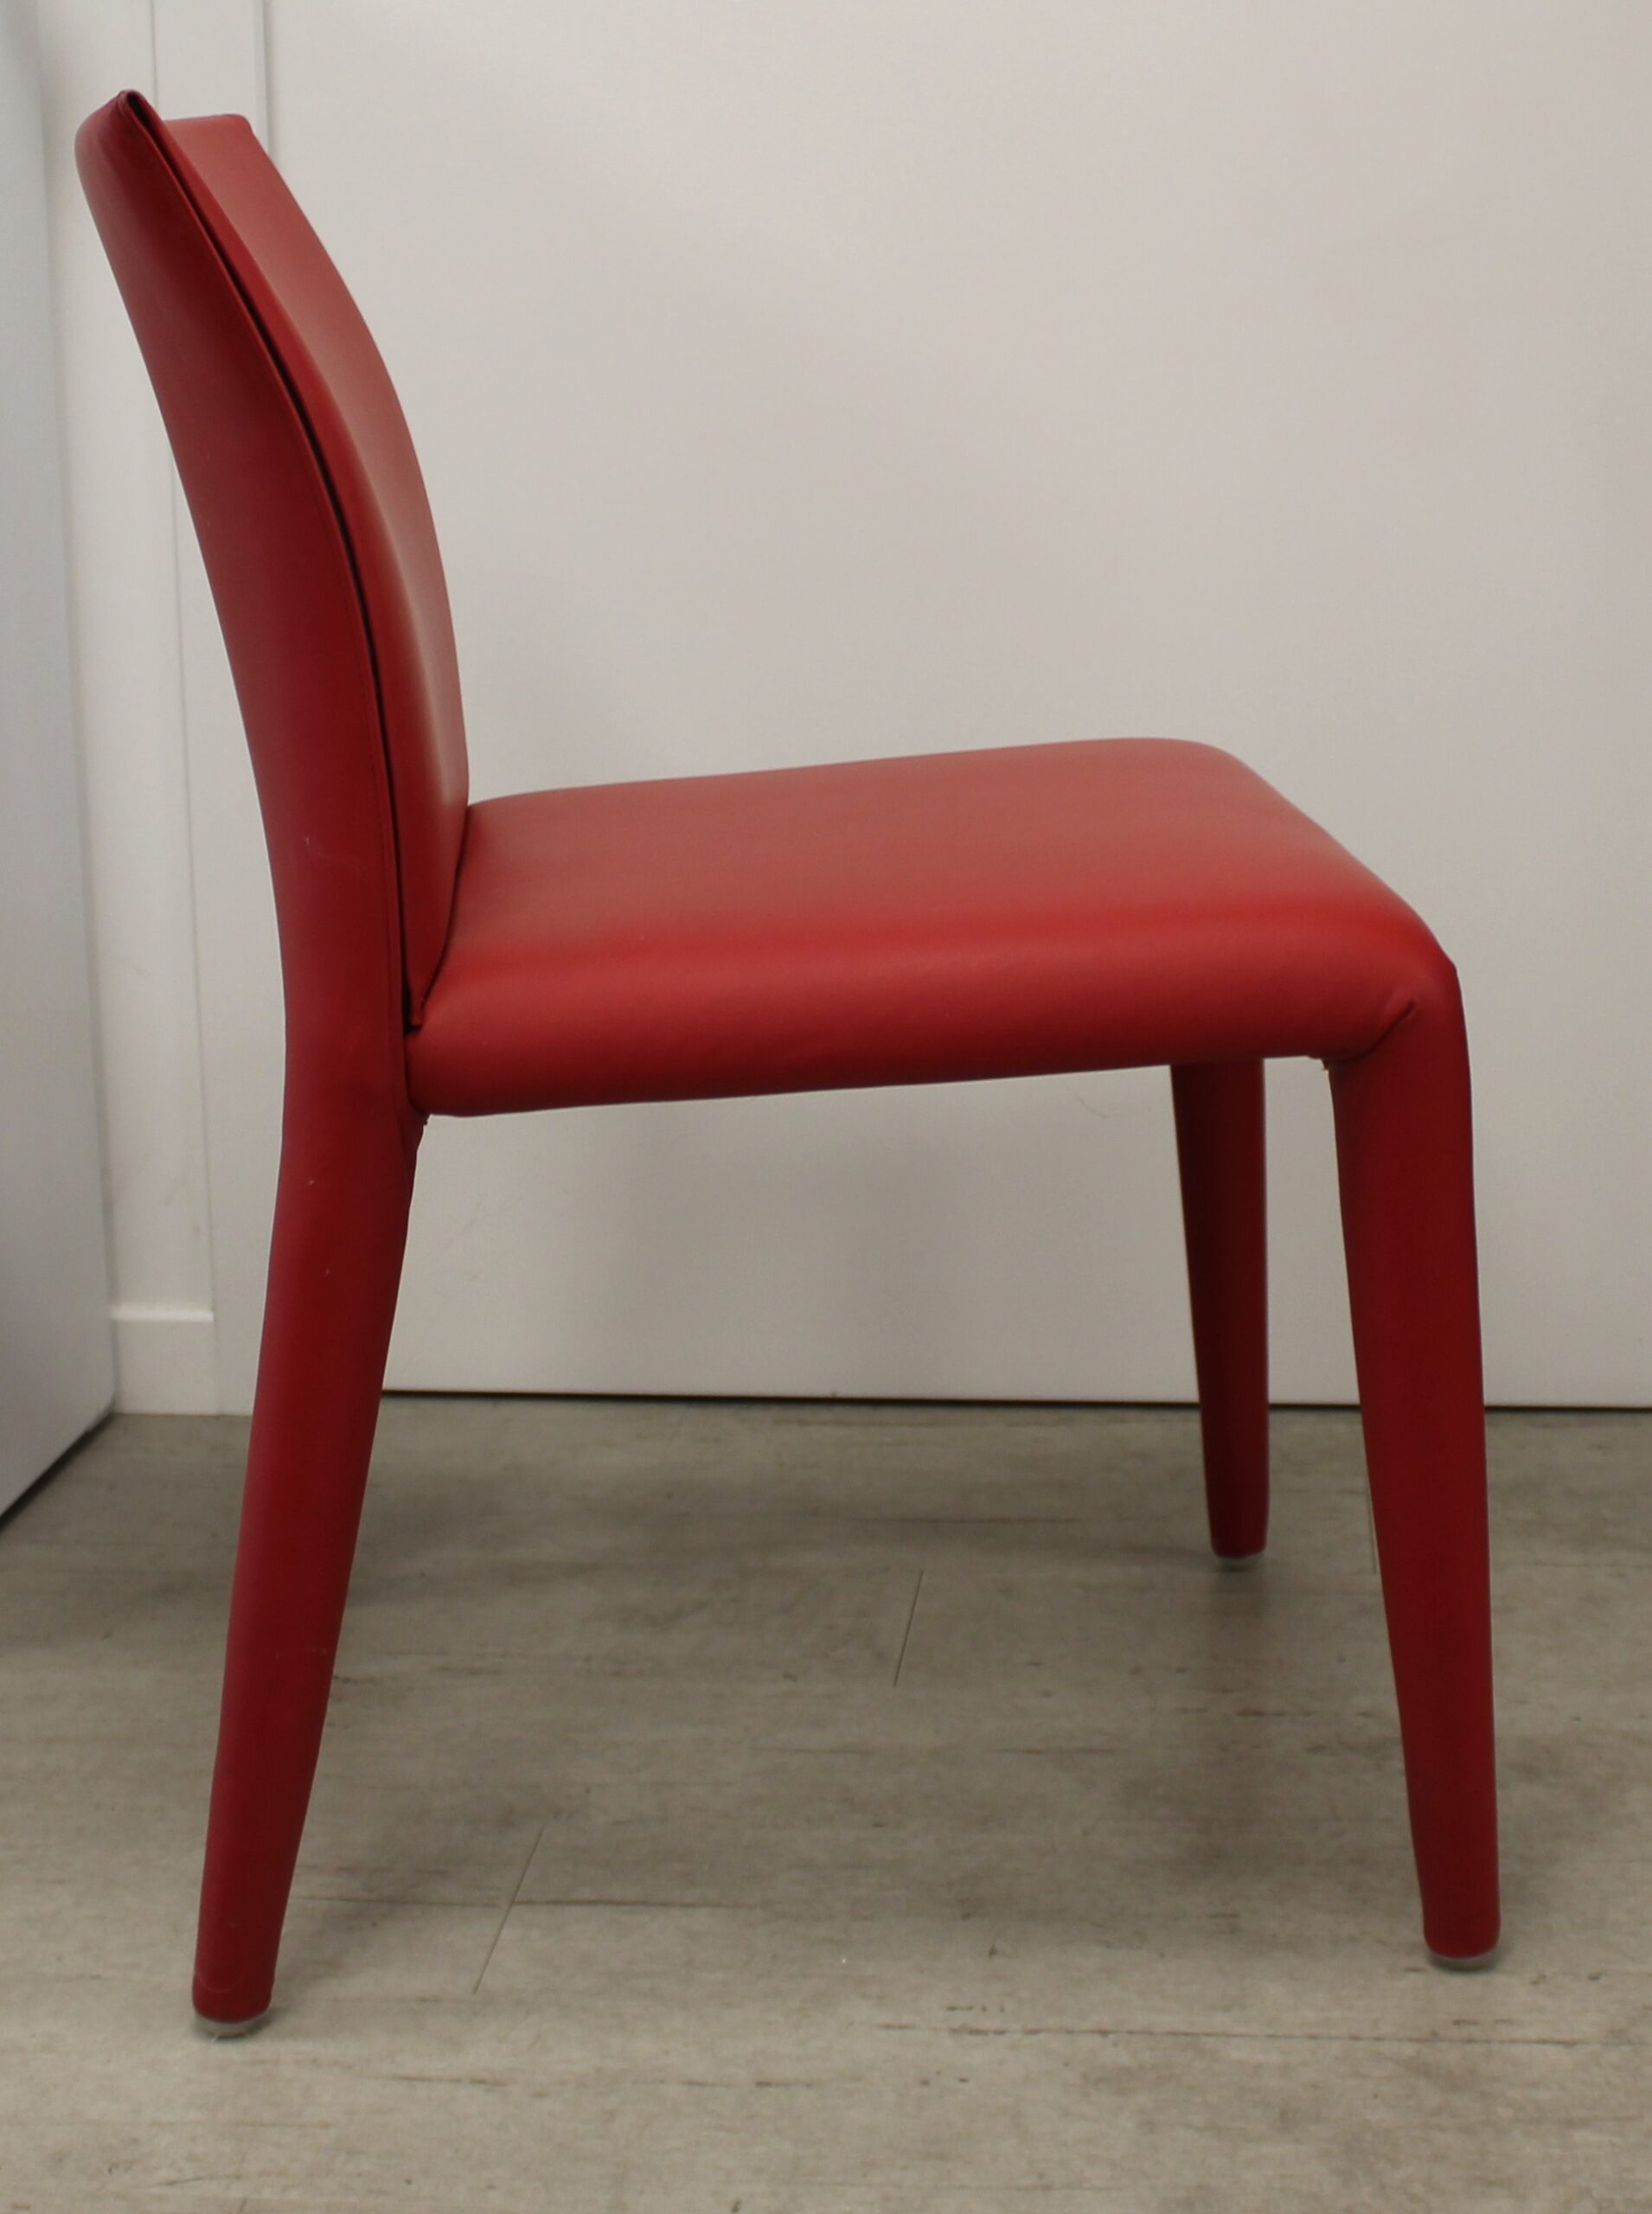 Chaise-cuir rouge1 Vol au vent-Designer-Mario Bellini-Occasion 1ère catégorie